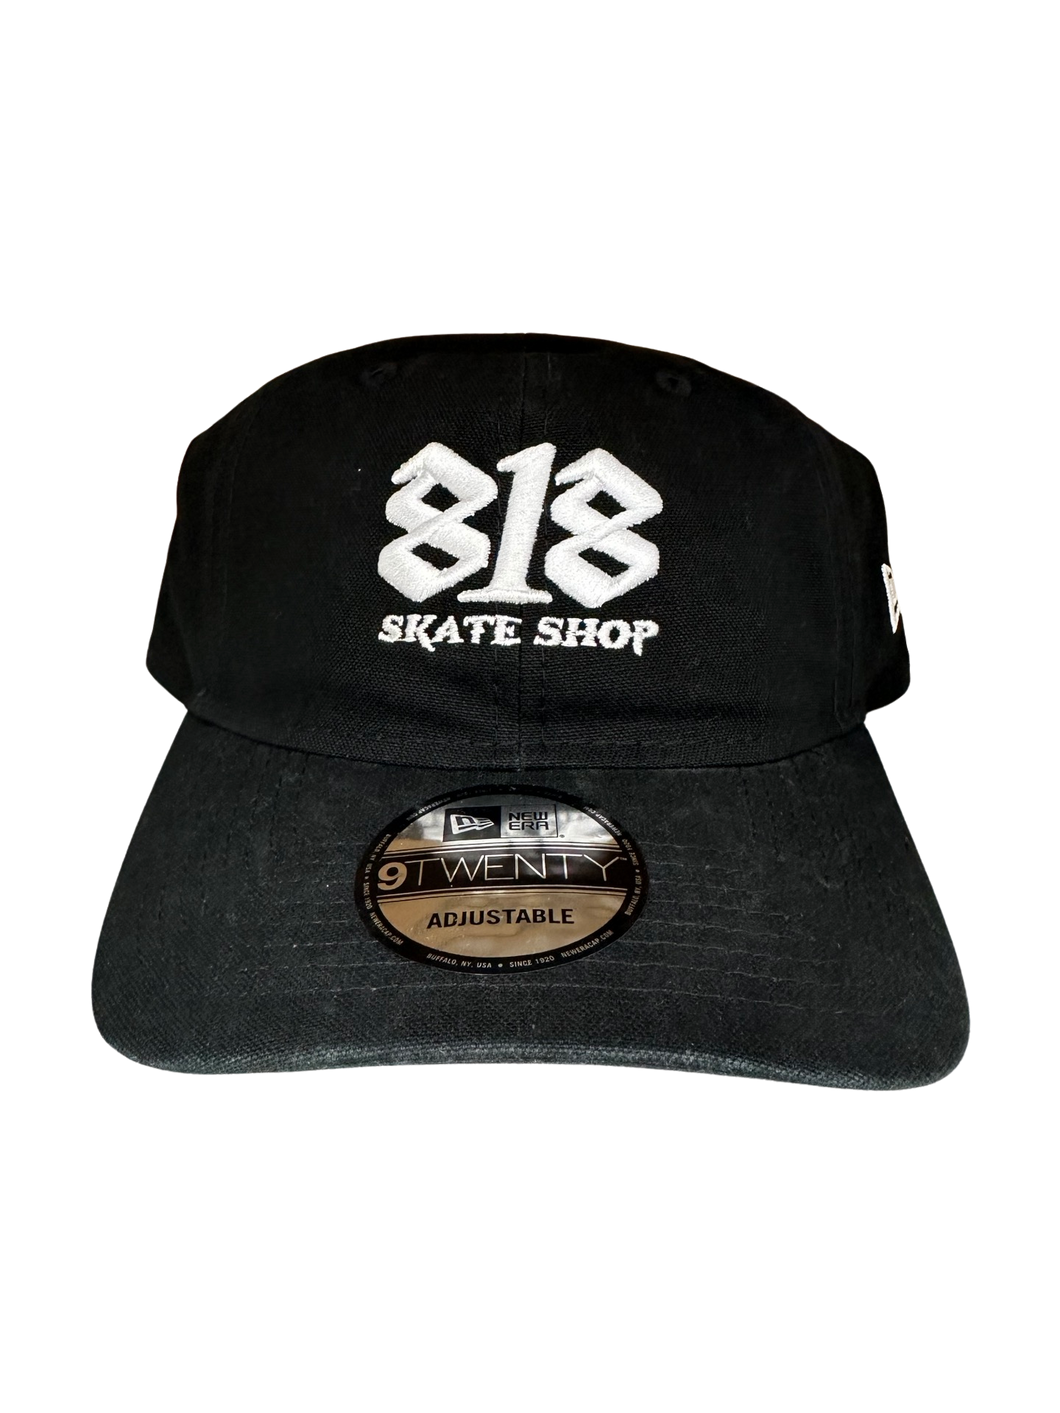 New Era 9Twenty 818 Skate Shop Logo Hat in Black